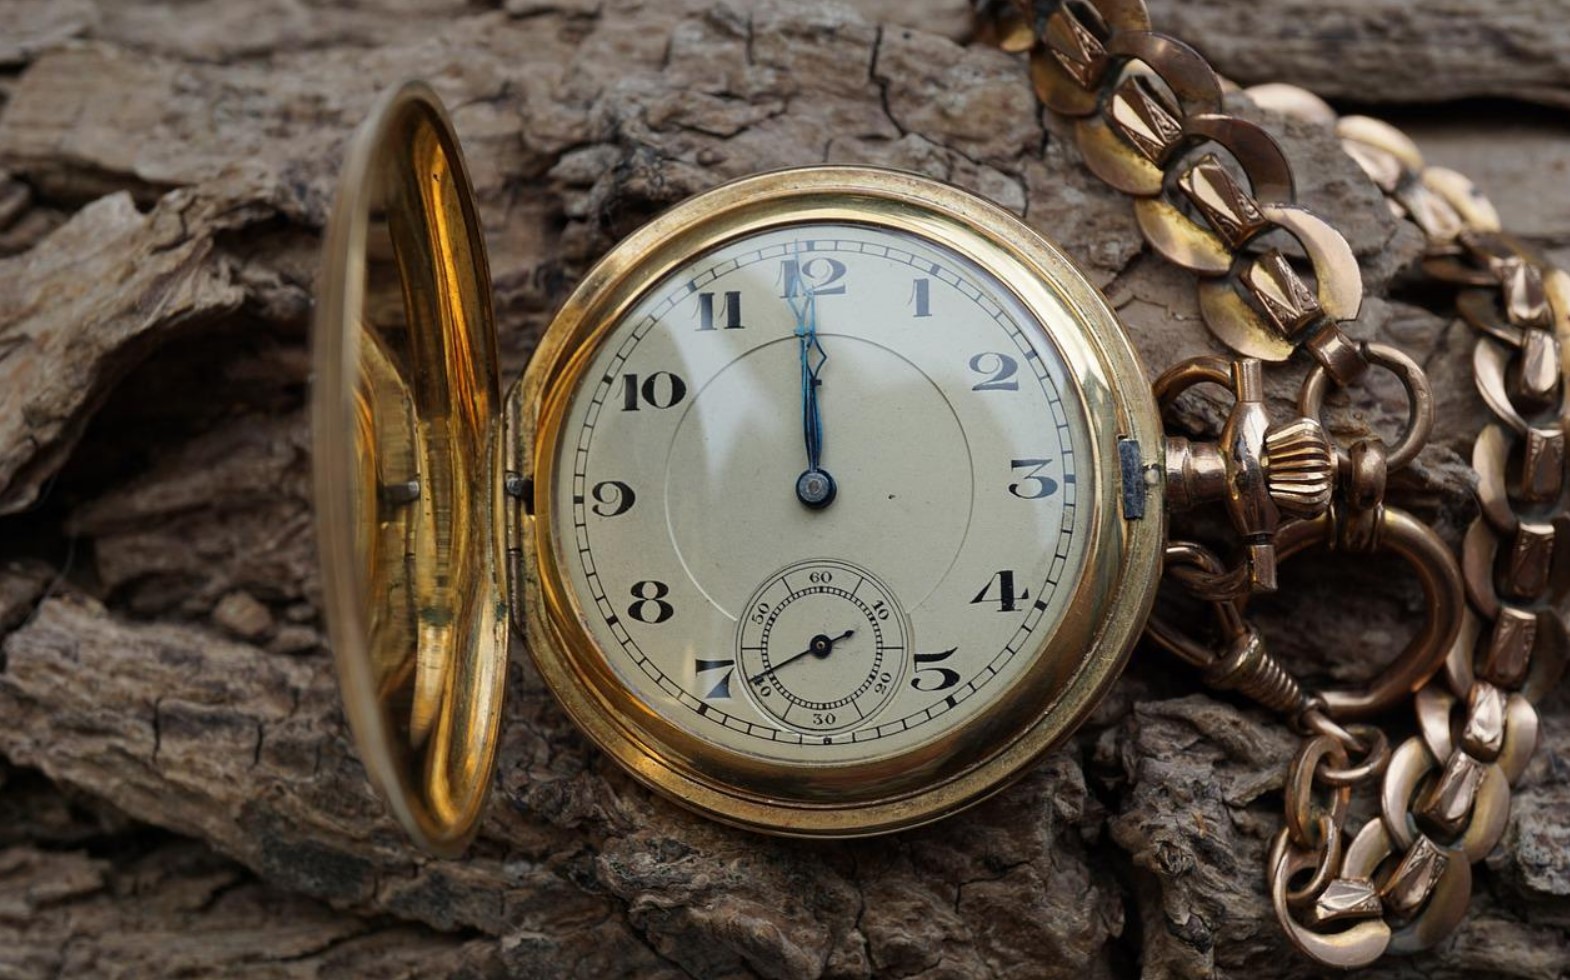 Снизу часы. Старинные часы. Древние часы. Механические часы старинные. Красивые часы.